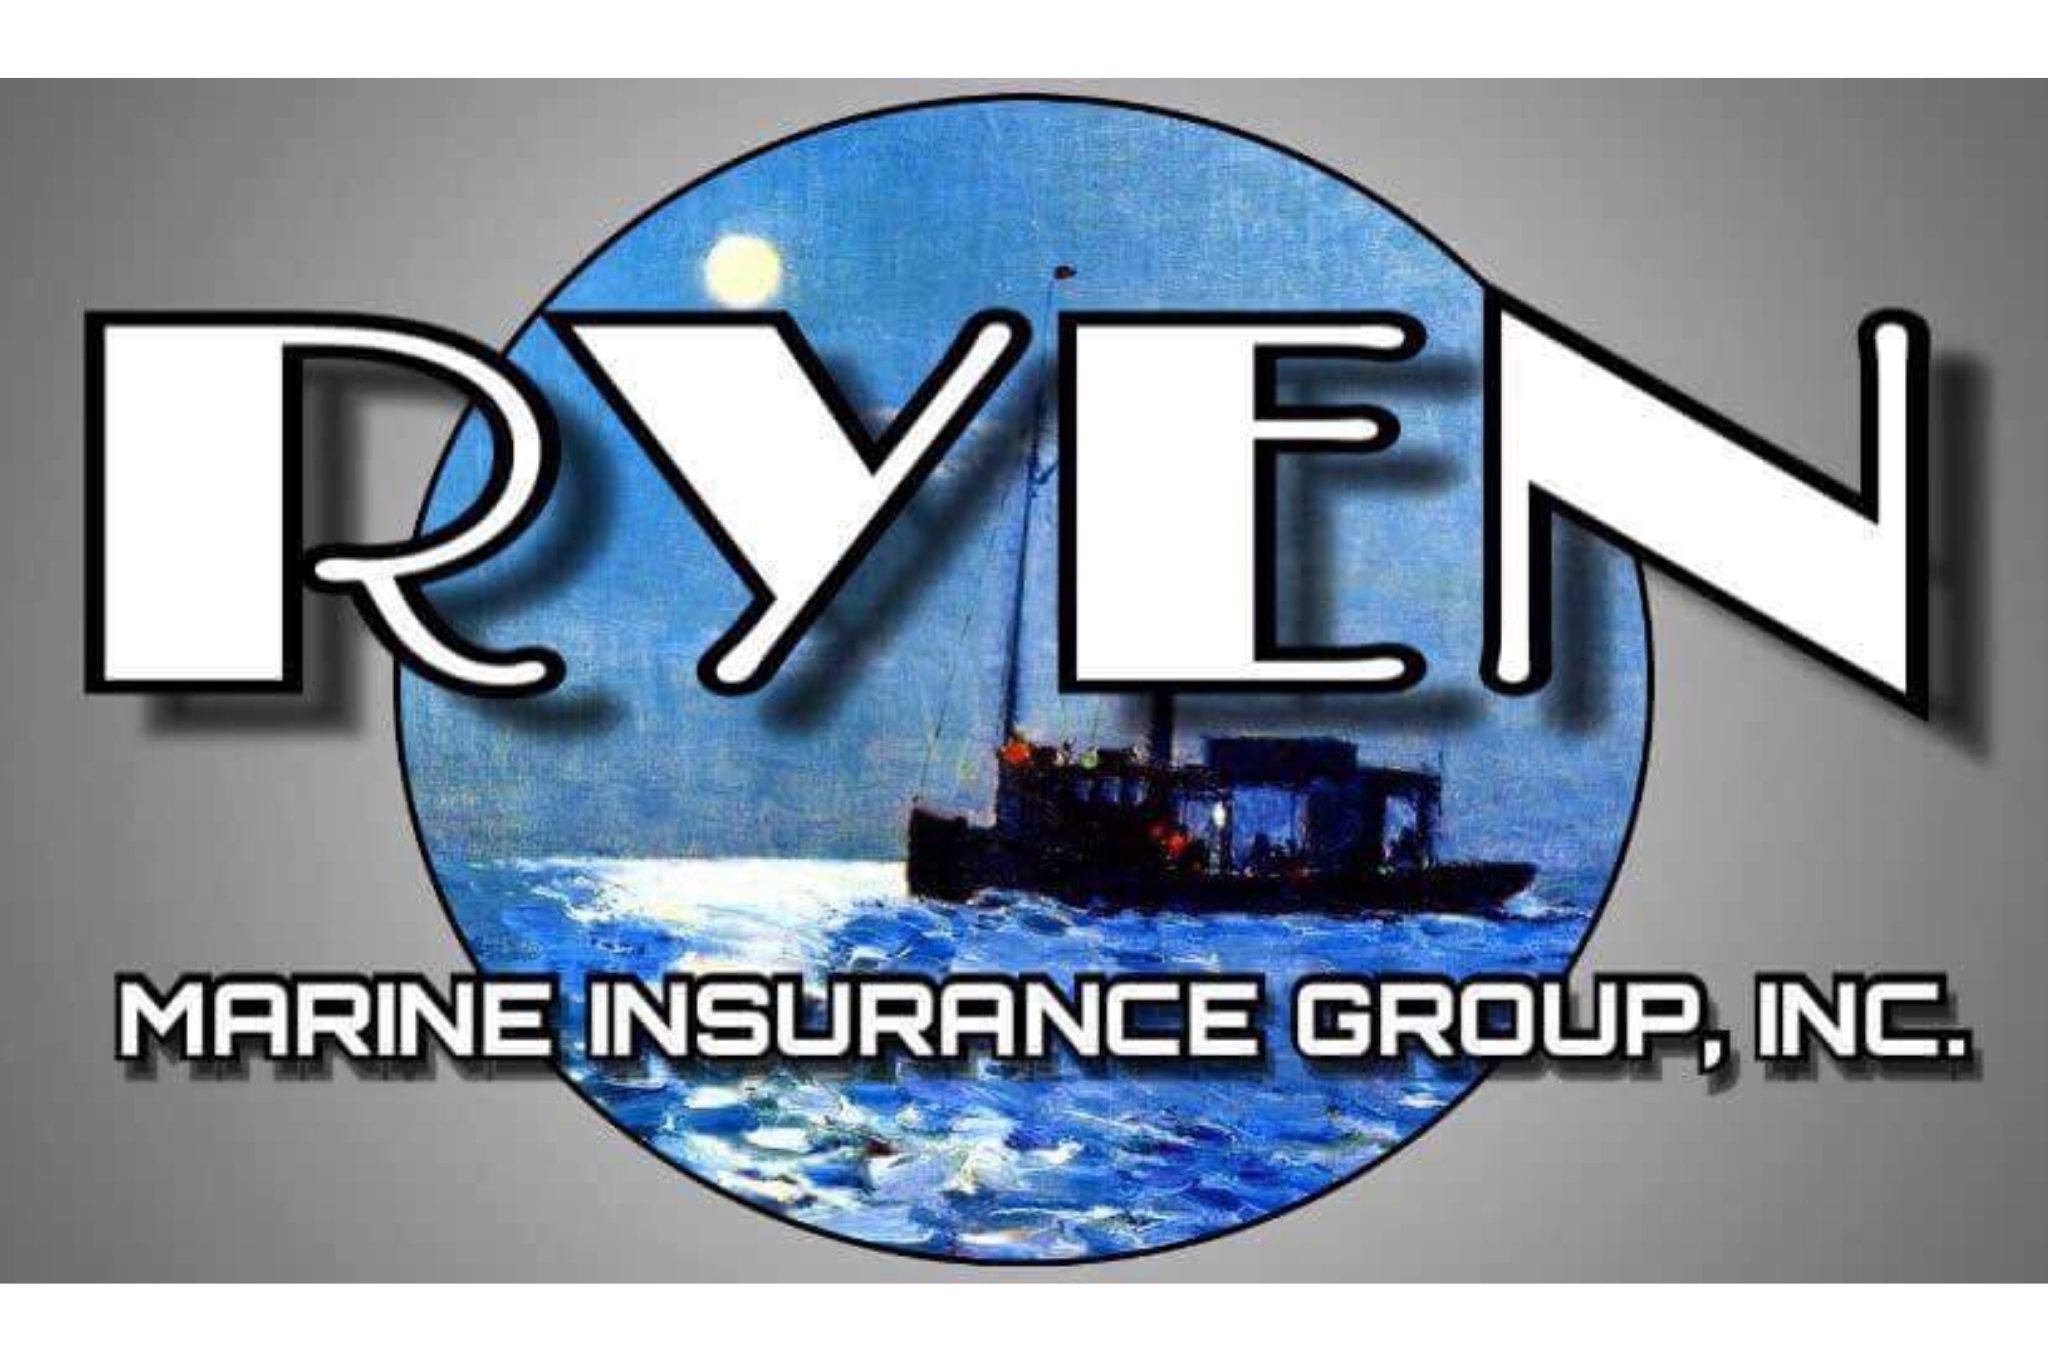 Ryen Marine Insurance Group